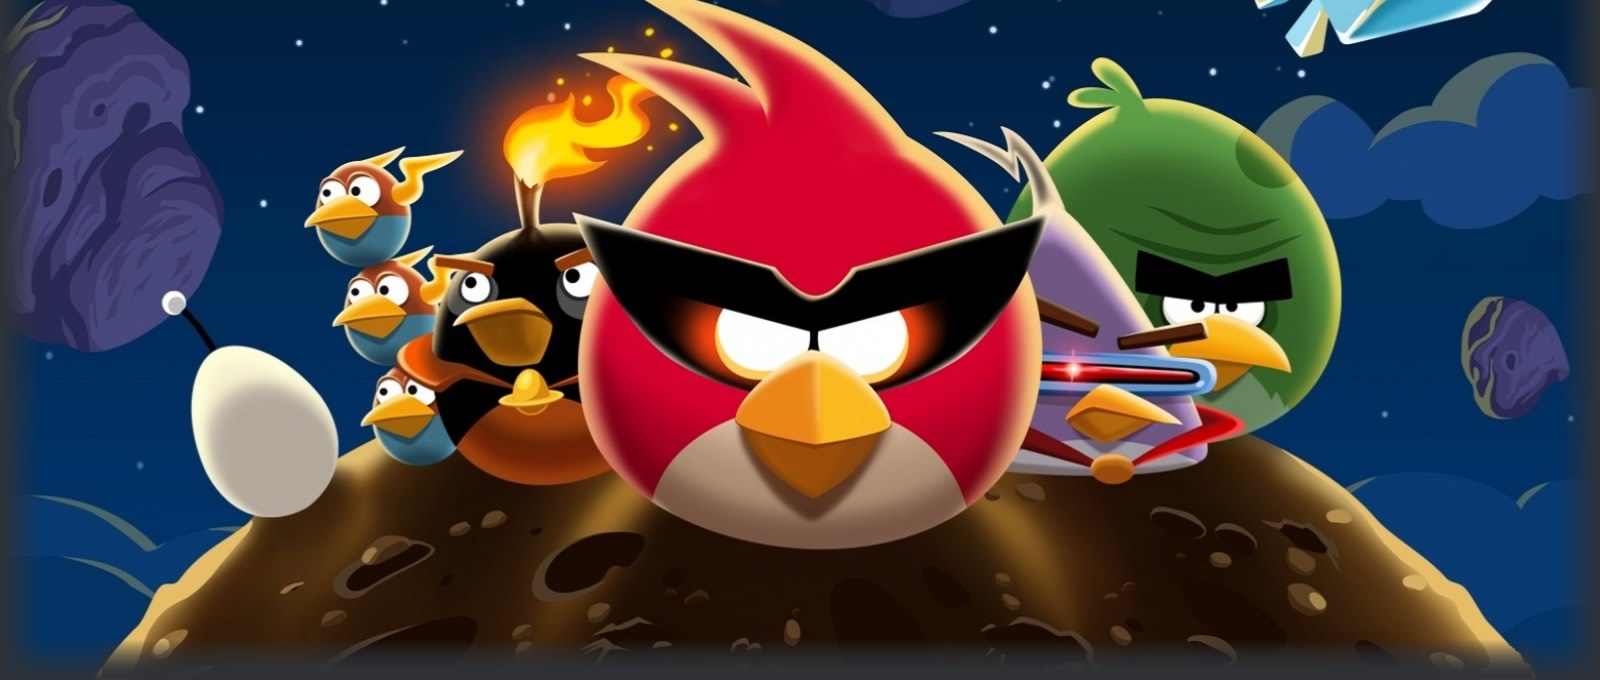 Angry Birds Con Celo Todo Sobre Los Angry Birds En Minijuegos Mx